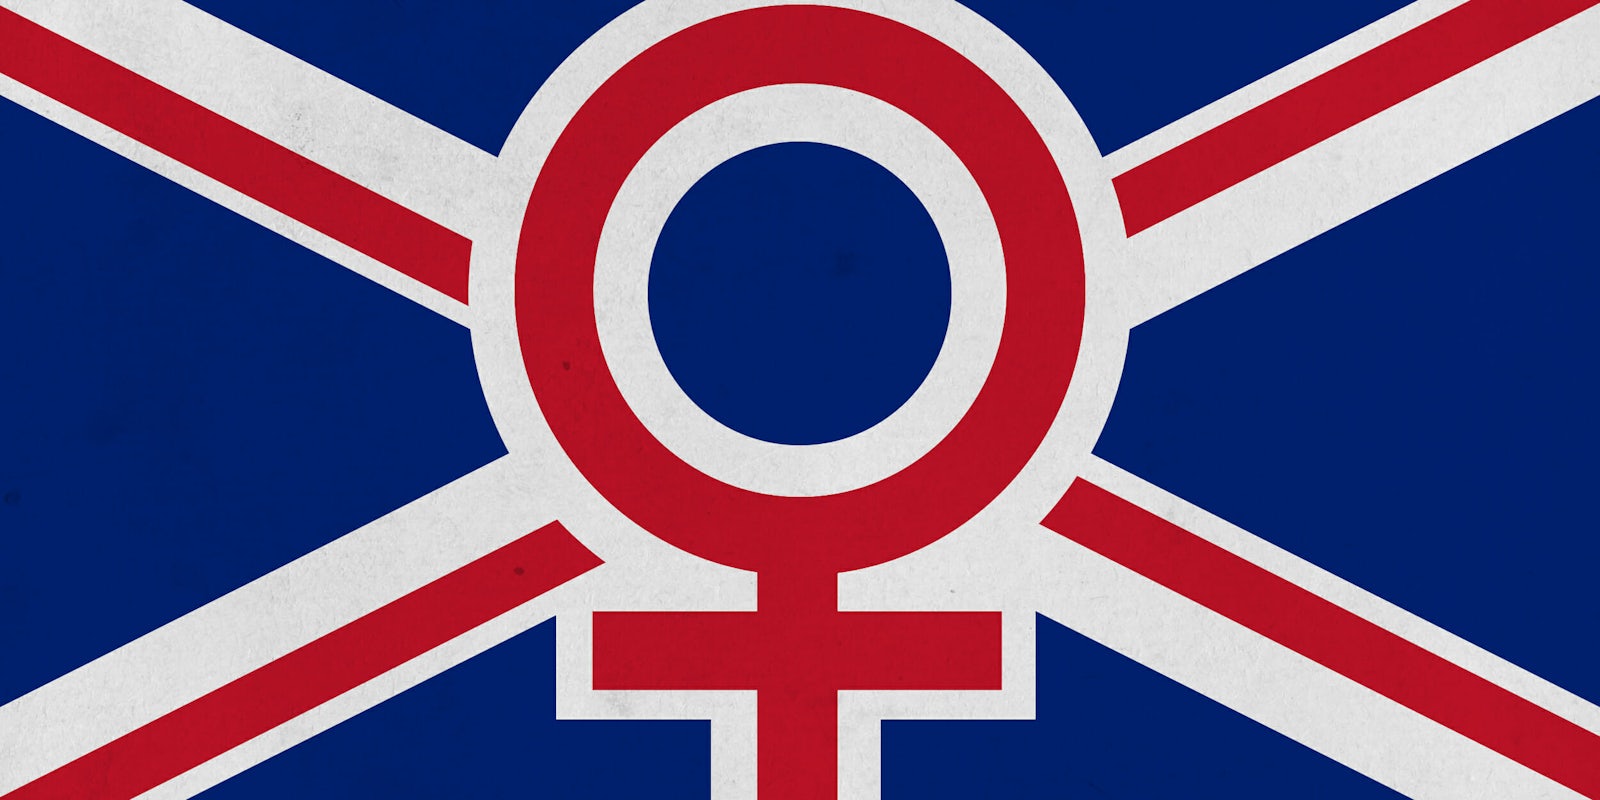 UK flag with feminist symbol